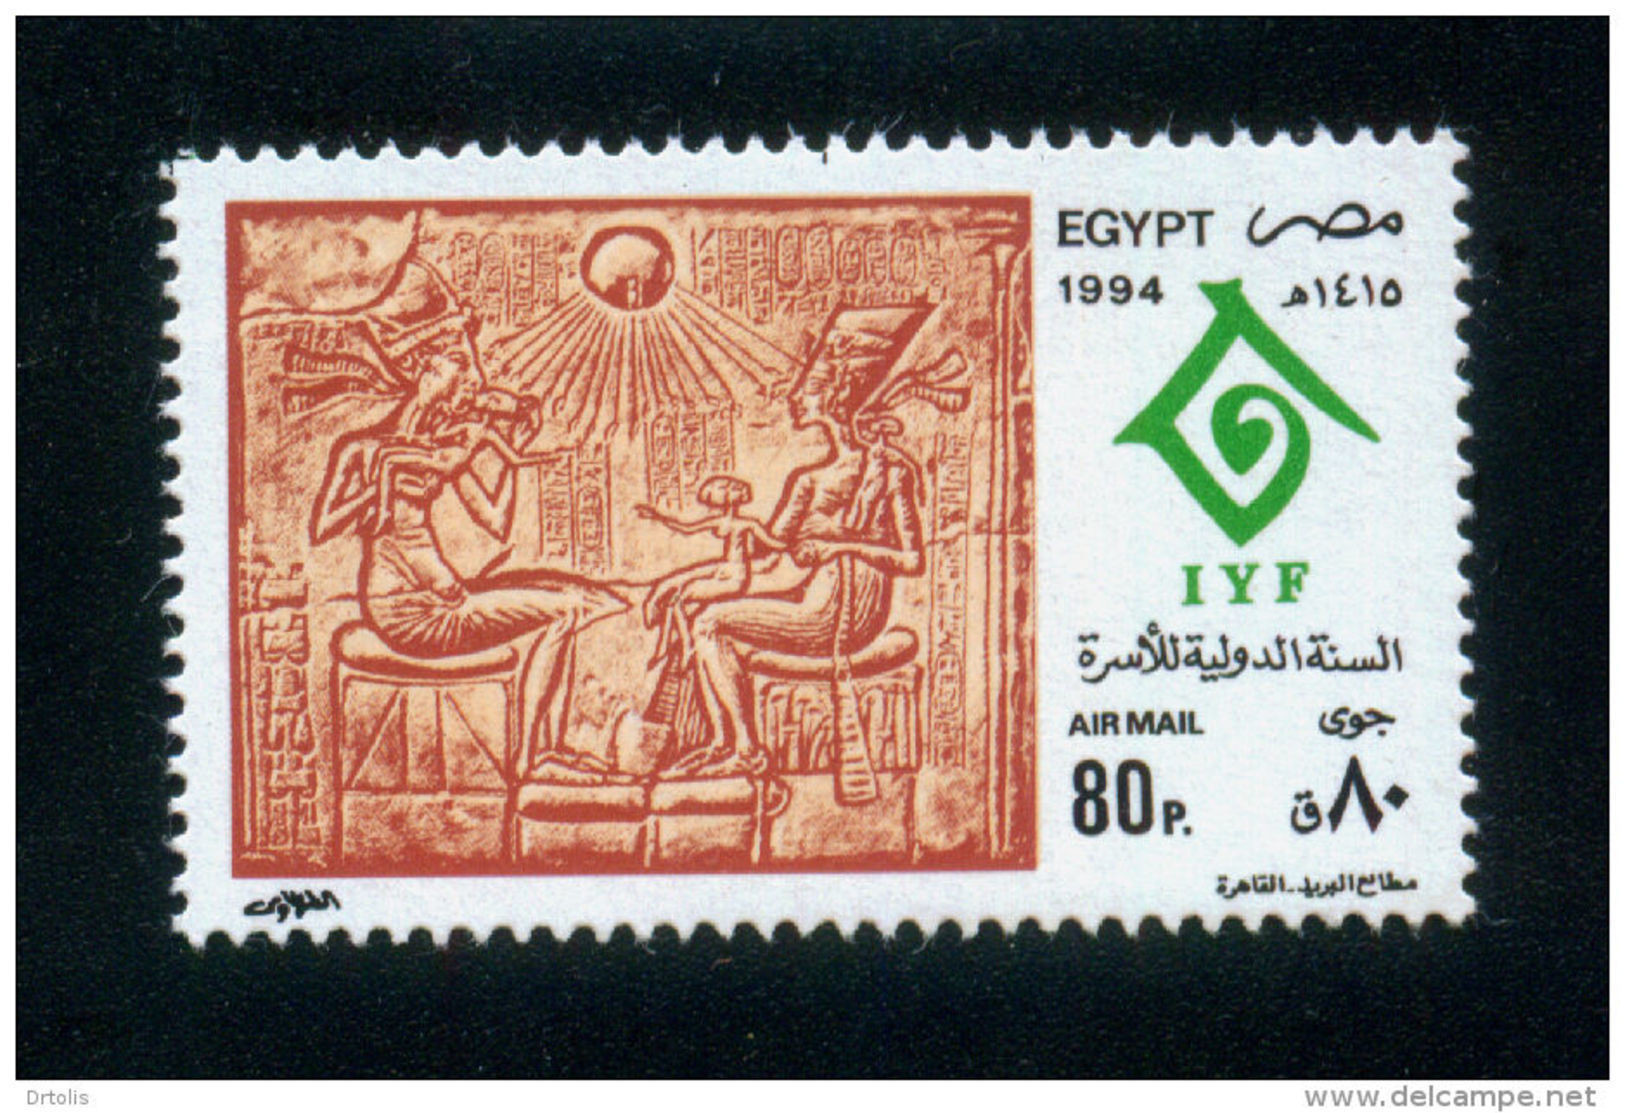 EGYPT / 1994 / UN / UN'S DAY / IYF/ INTL YEAR OF THE FAMILY / EGYPTOLOGY / AKHENATEN ; NEFERTITI & CHILDREN / MNH / VF - Unused Stamps